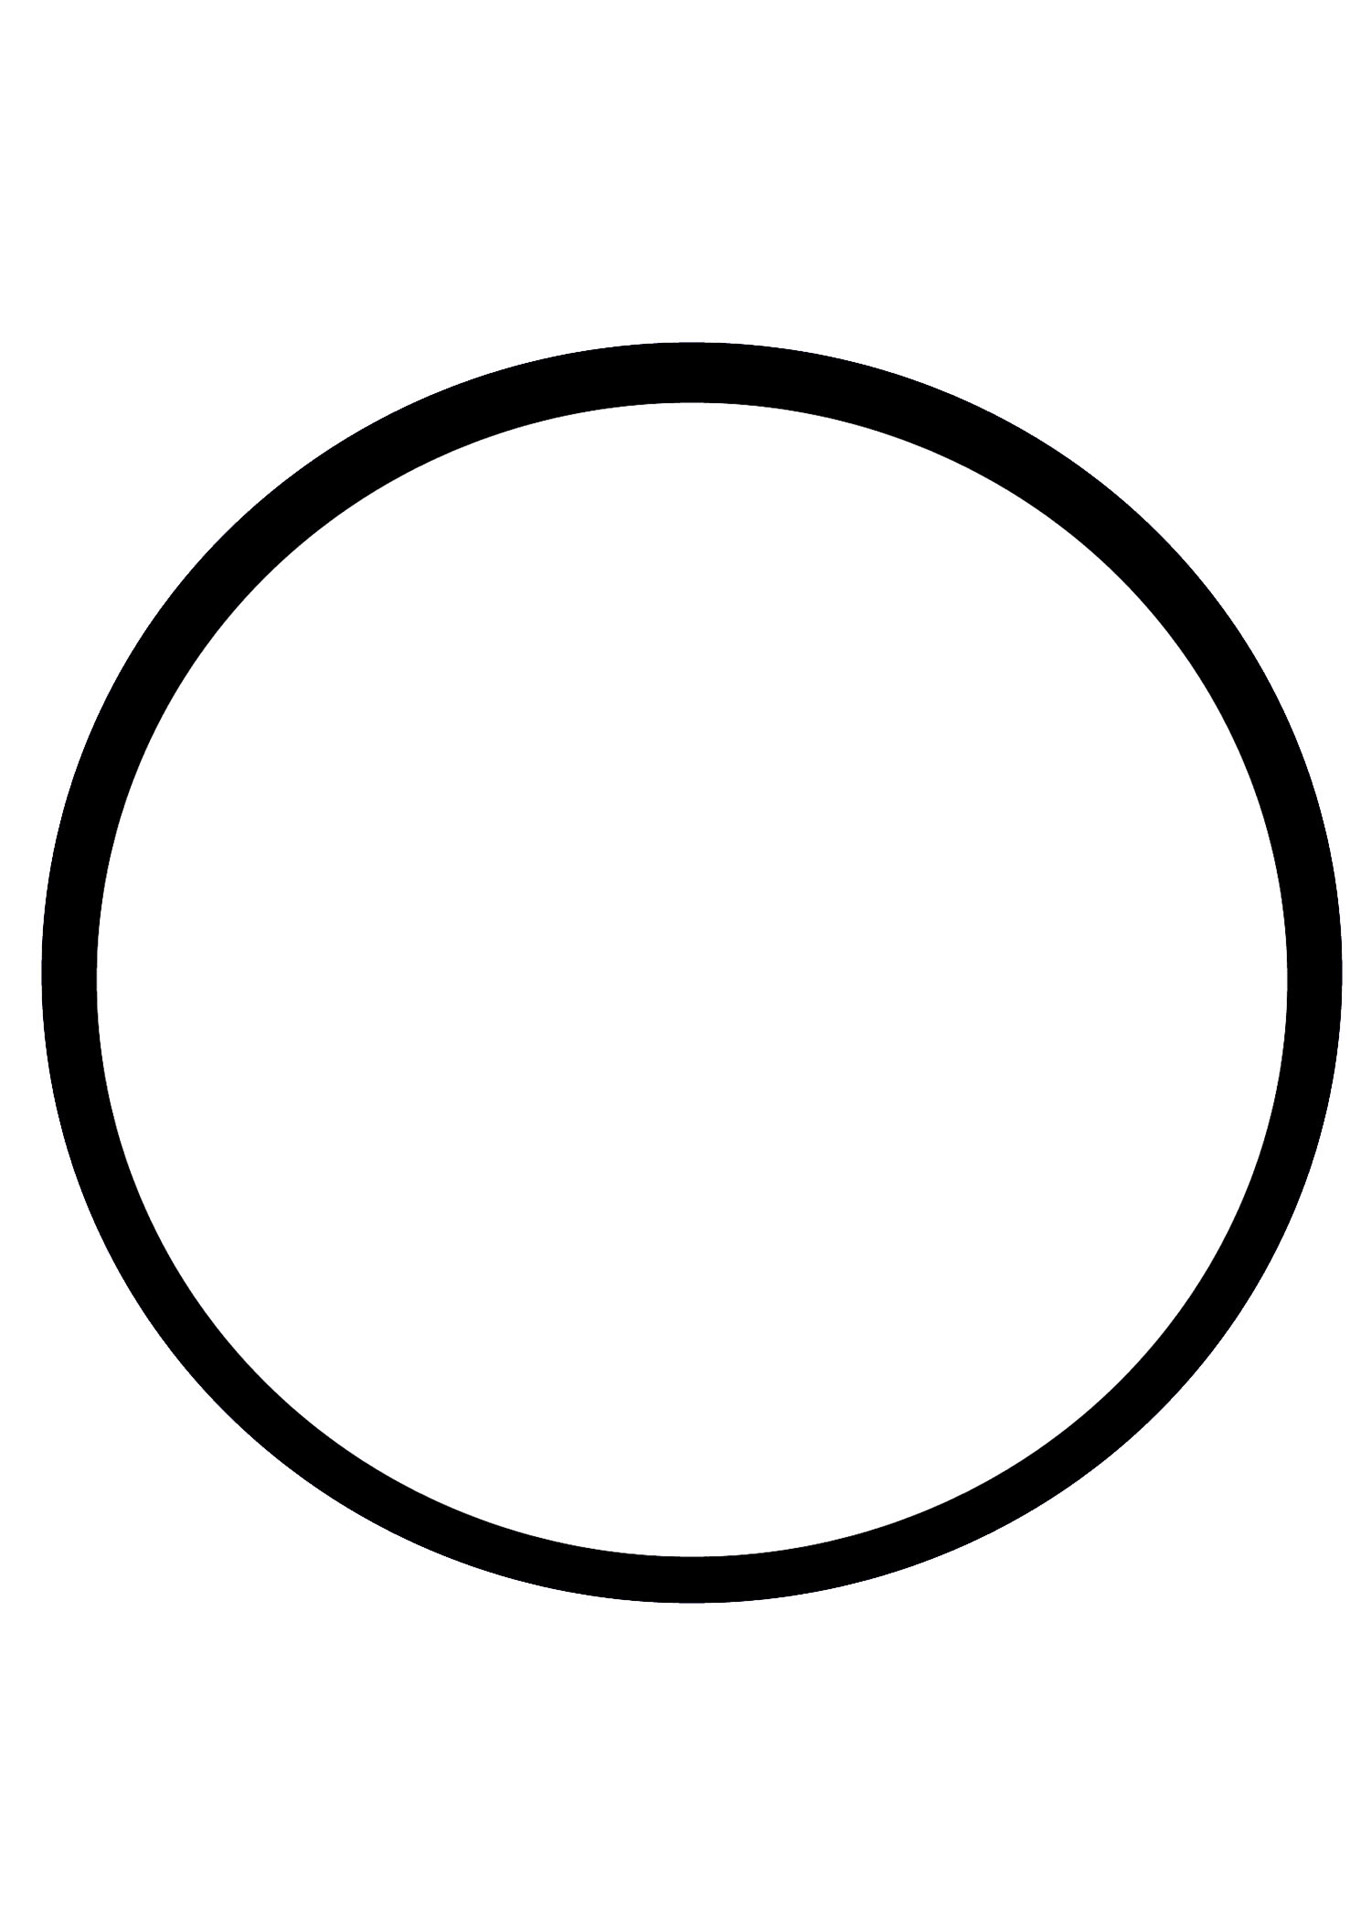 Basic Circle Outline Free Stock Photo Public Domain Pictures - Riset